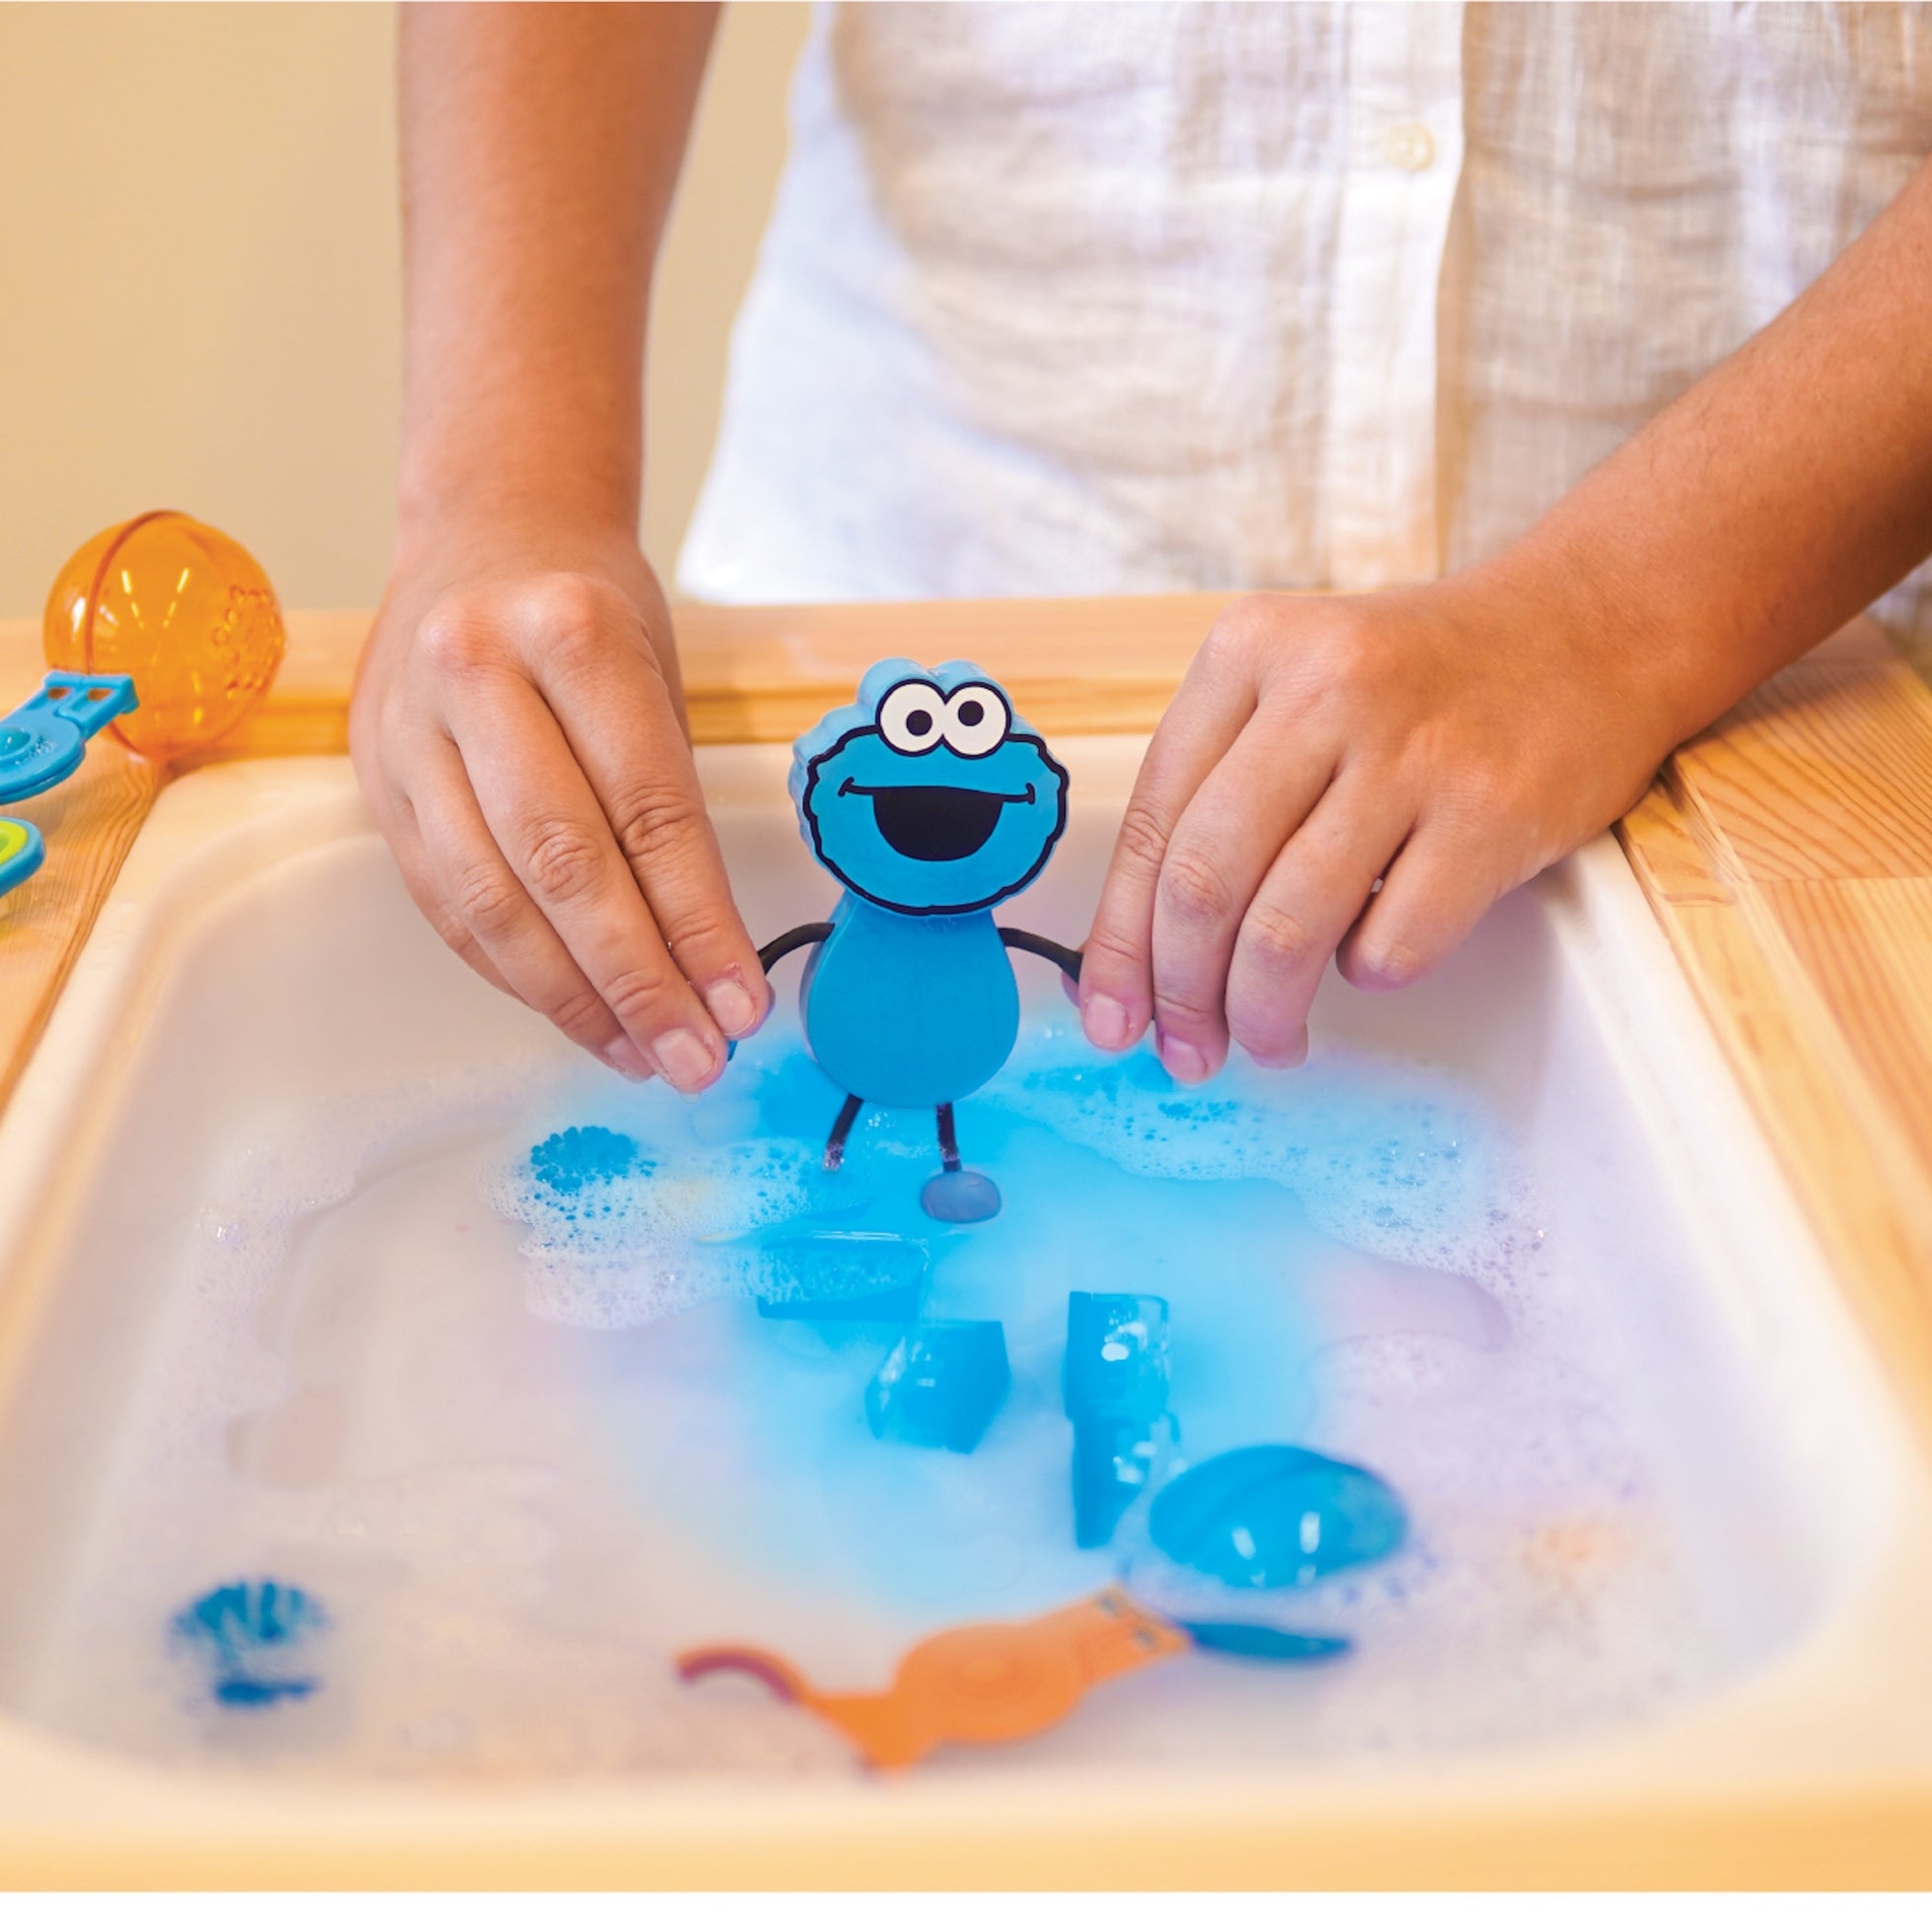 Glo Pals Light-Up Sensory Toy - Sesame Street Cookie Monster